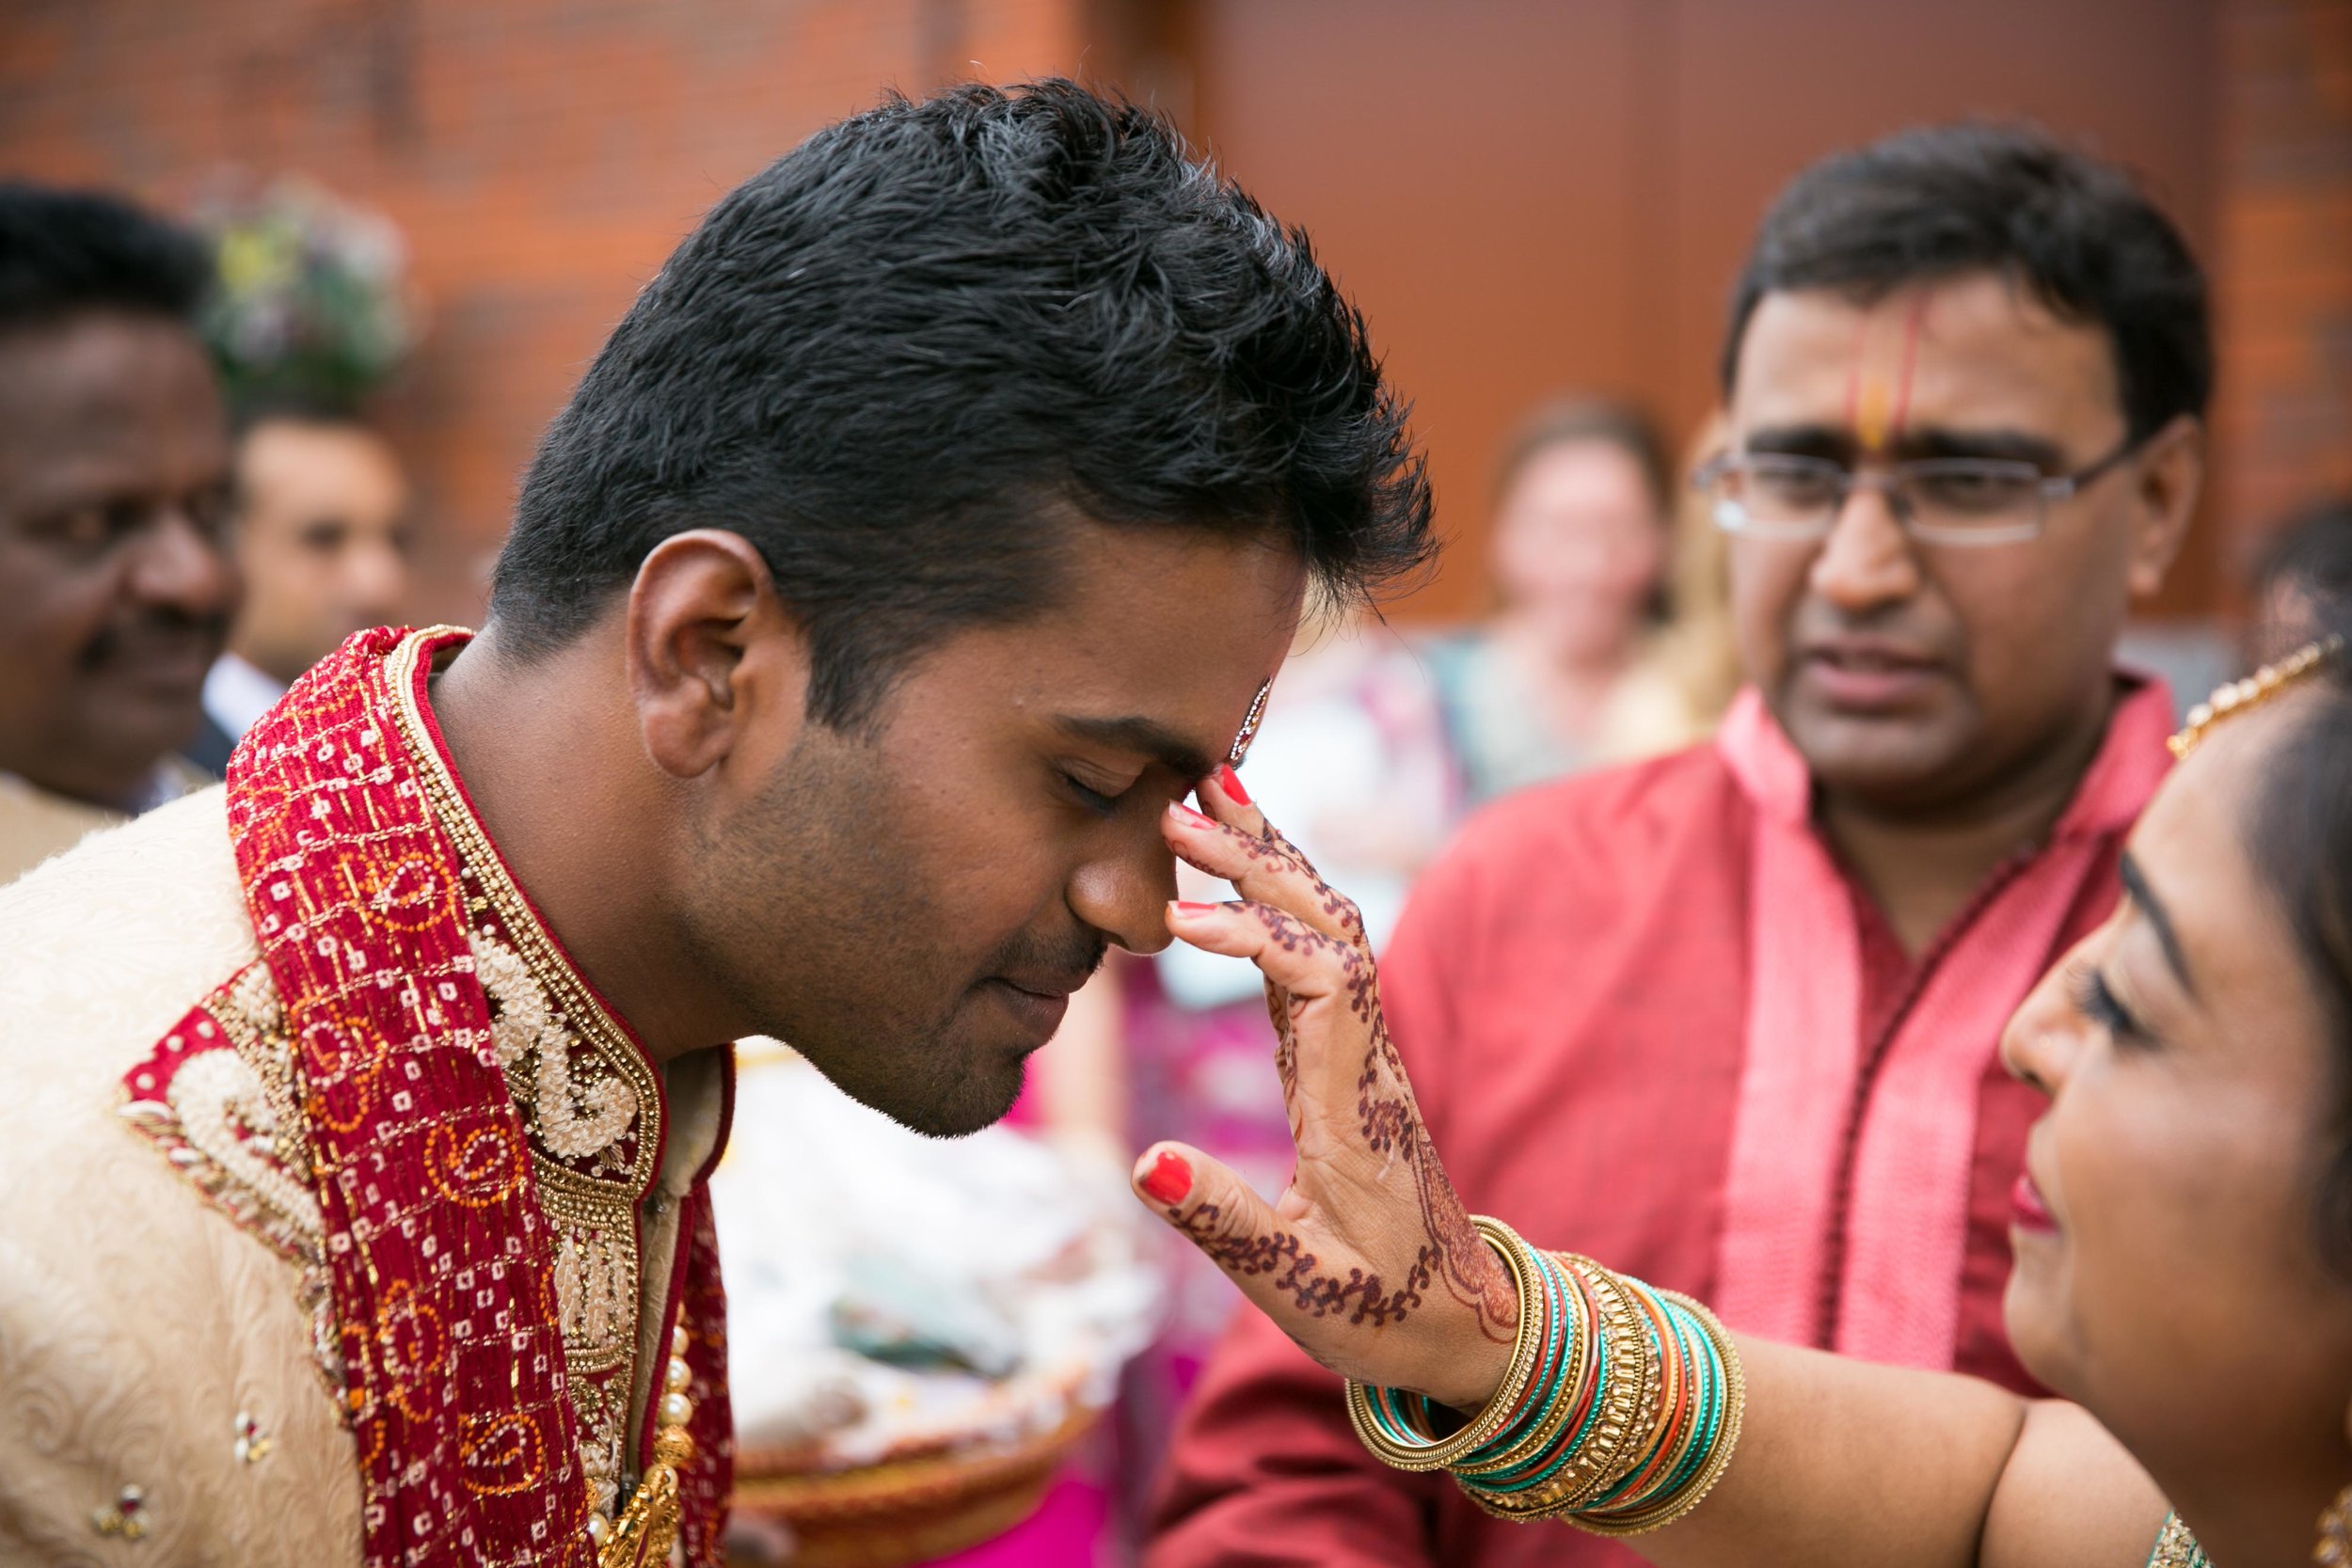 premier-banquetting-london-Hindu-asian-wedding-photographer-natalia-smith-photography-6.jpg